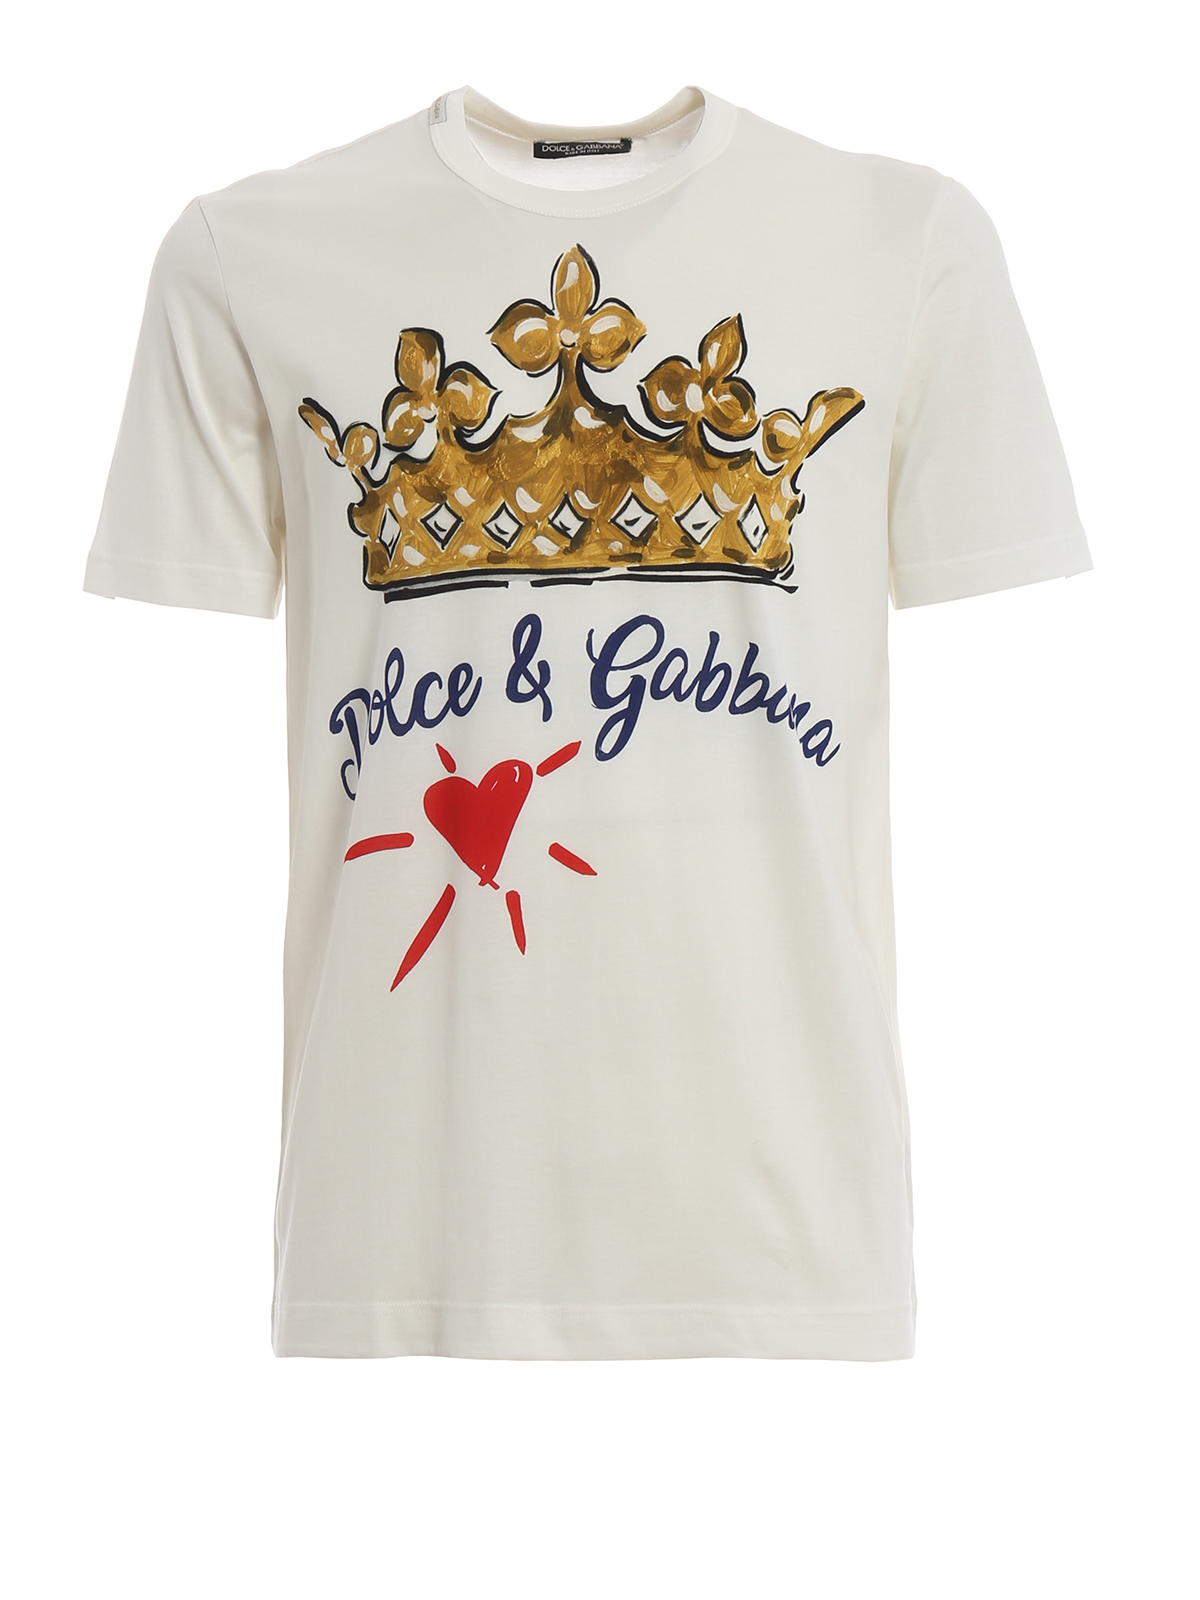 Planeet Liever Vervormen T-shirts Dolce & Gabbana - Dolce & Gabbana crown print Tee -  G8IA8THH7QWHWZ47